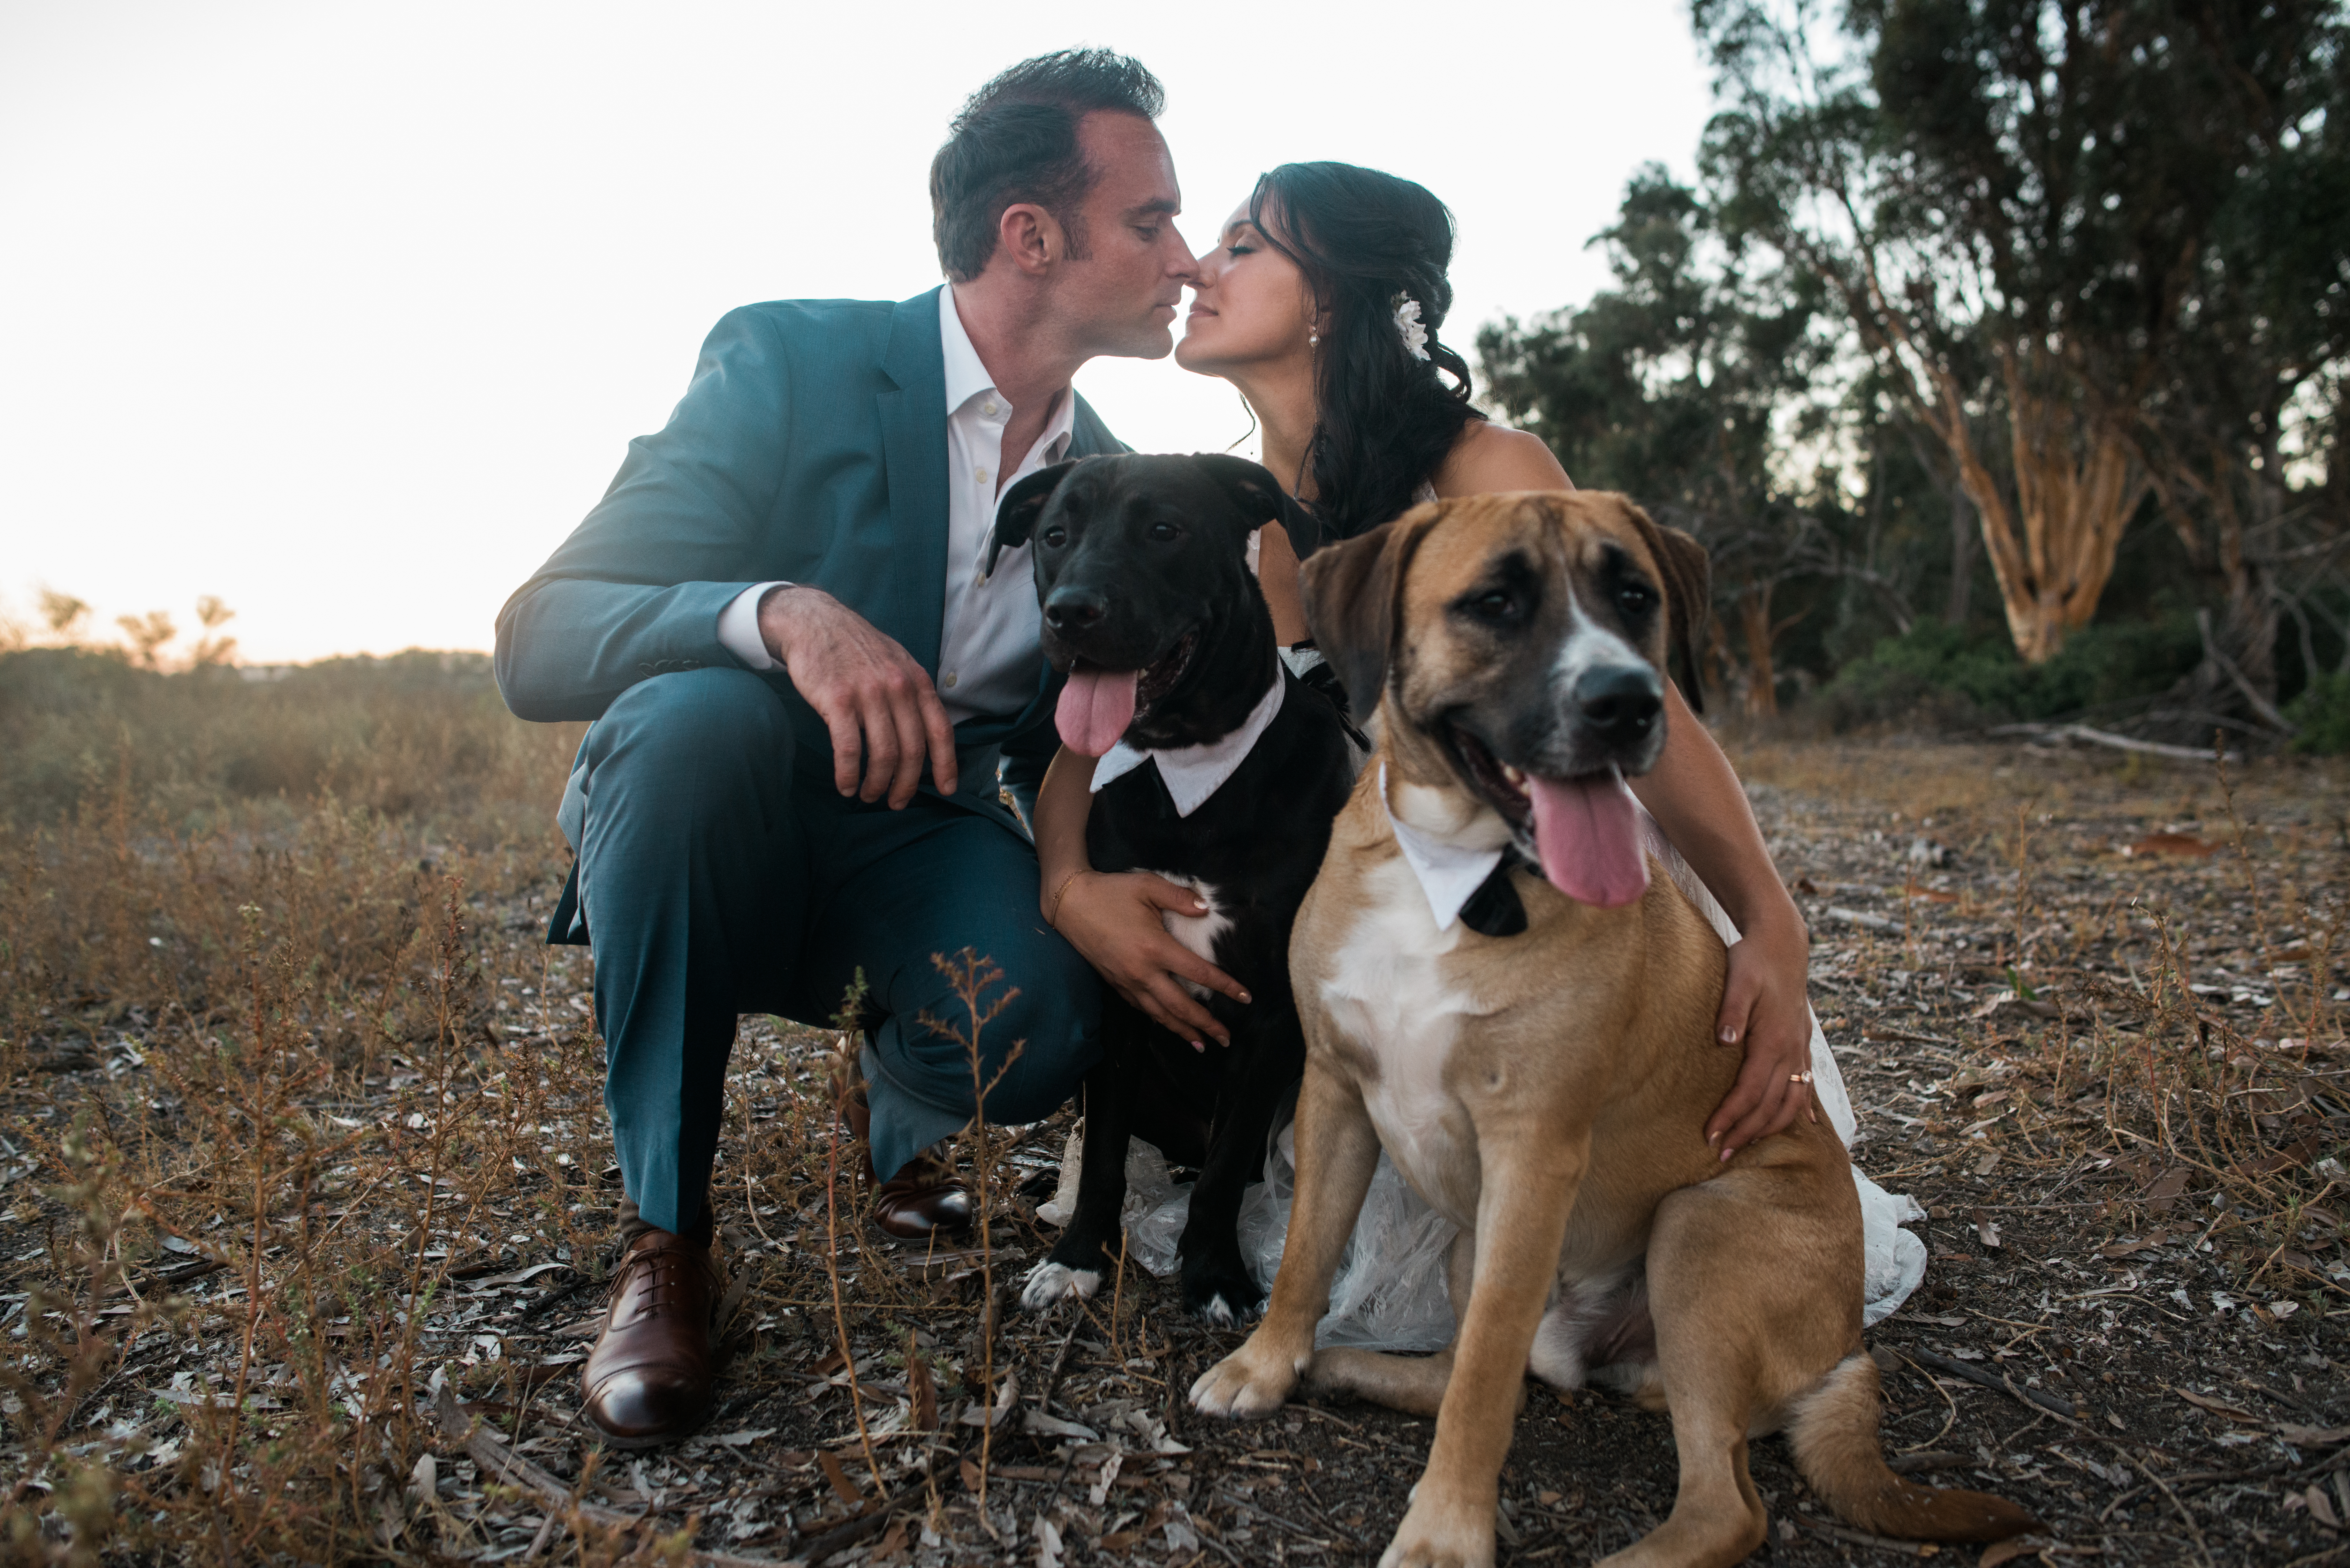 Dog andIntimate Couple Portraitsat a Bohemian Backyard in Rancho Bernardo CA by Kylie Rae Photography